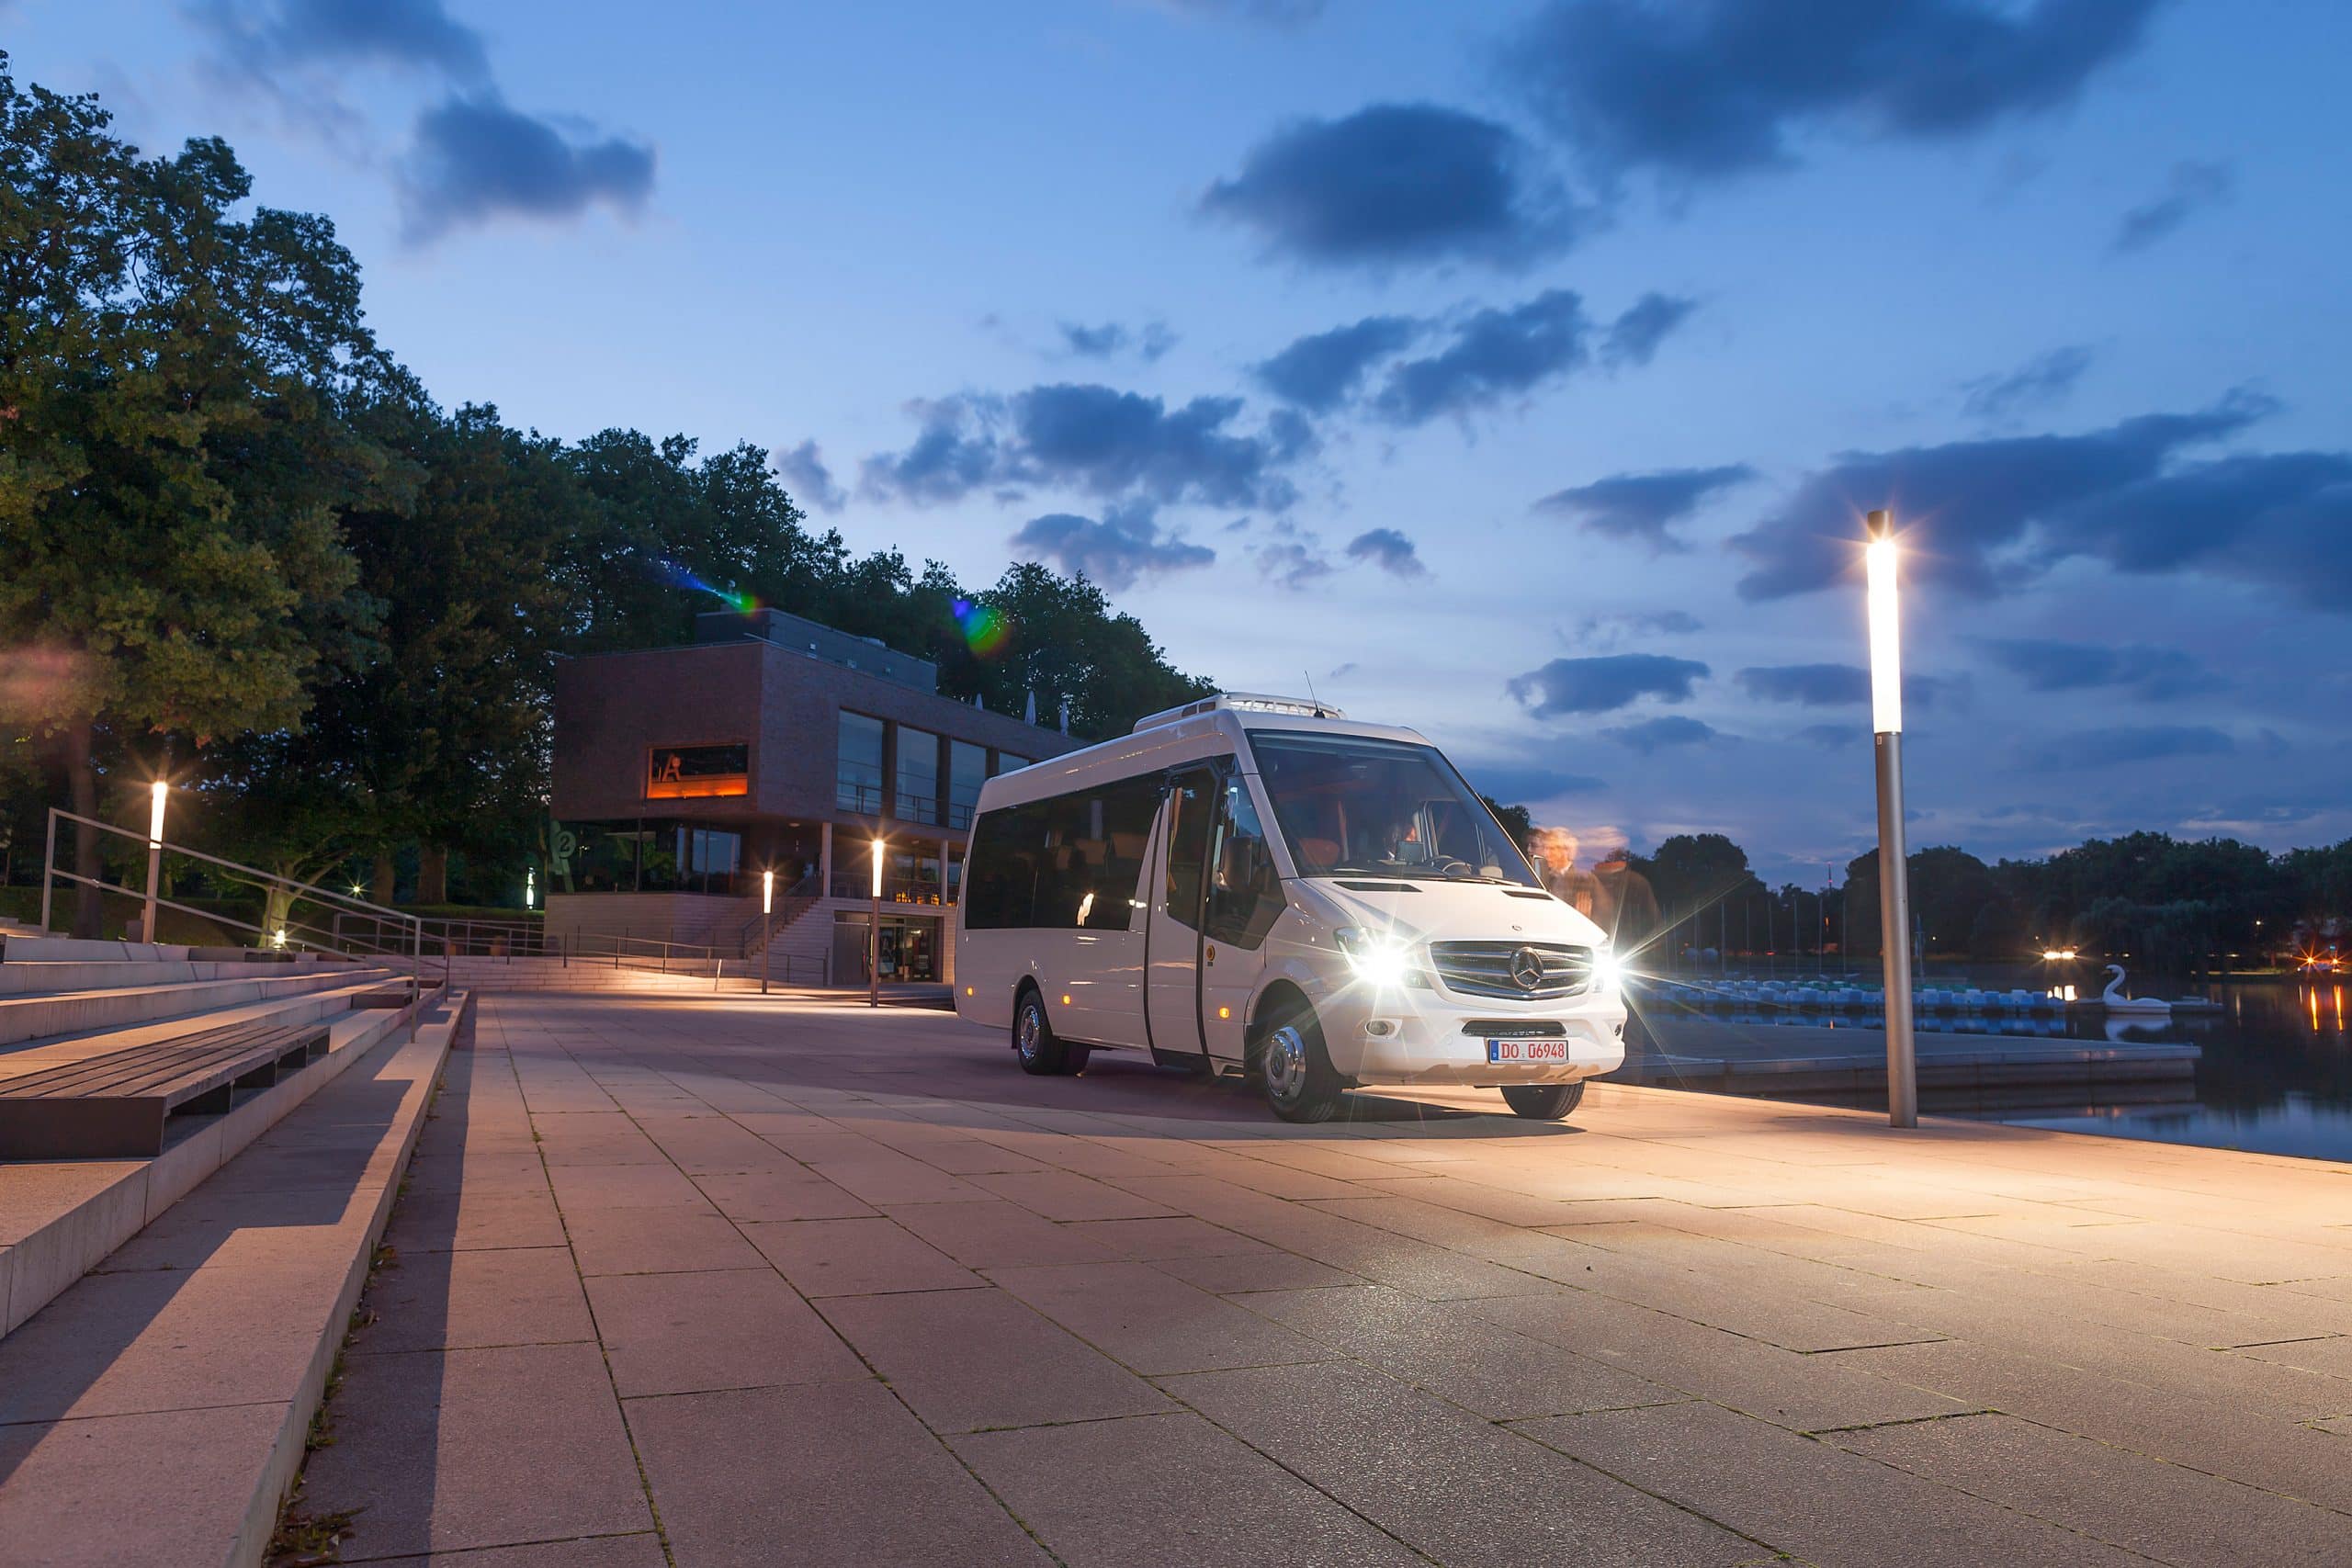 Unbearbeitete Ansicht | Daim­ler Transportation | Bildbearbeitung, Automotive, Landscape, Products/Packaging | Daimler Bus Projektarbeit: Printpostproduction, Lookentwicklung, Retusche | Fotograf: Die Marquardts